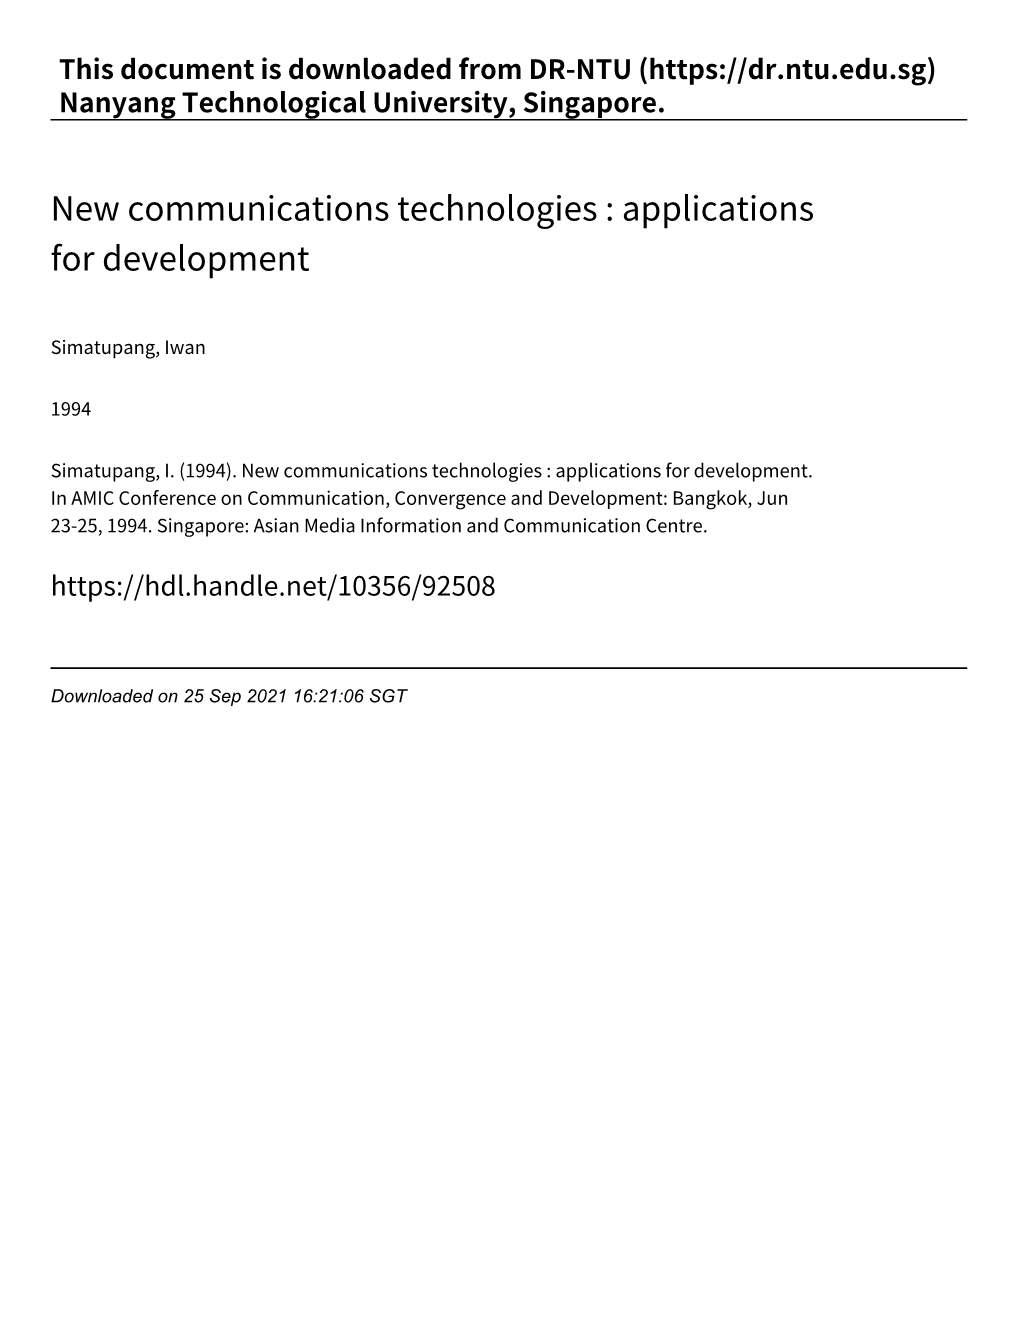 New Communications Technologies : Applications for Development